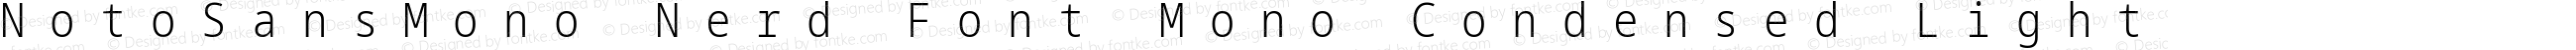 Noto Sans Mono Condensed Light Nerd Font Complete Mono